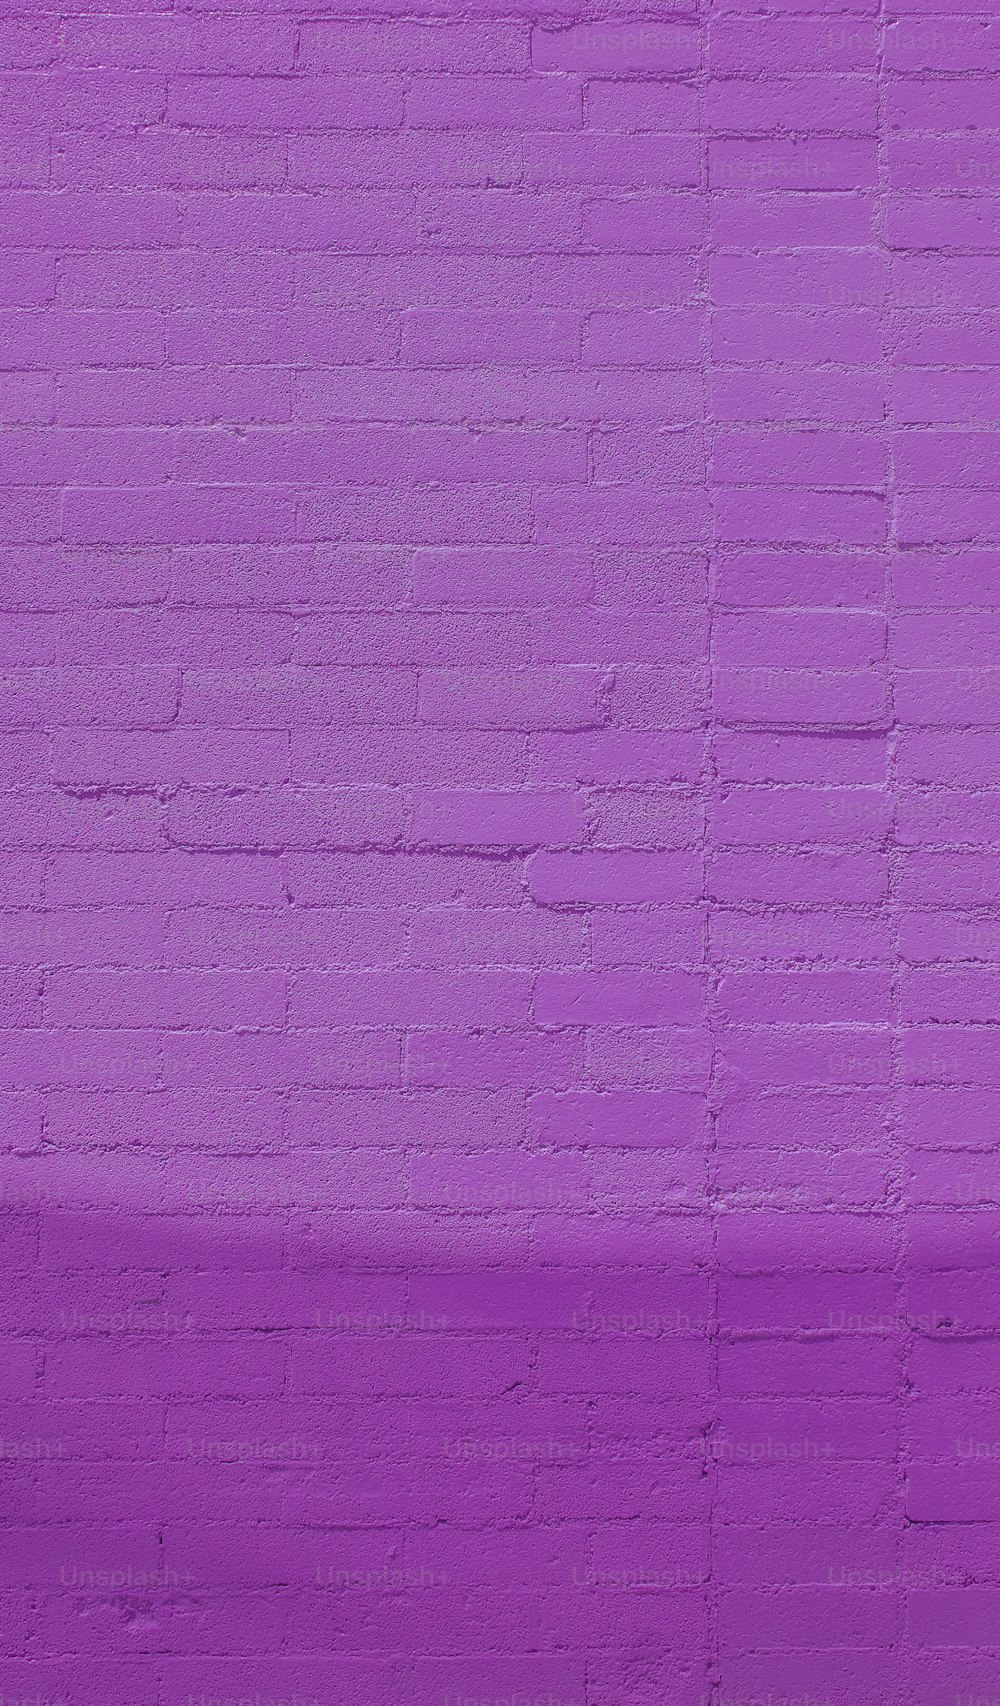 Una pared de ladrillo púrpura con un banco frente a ella